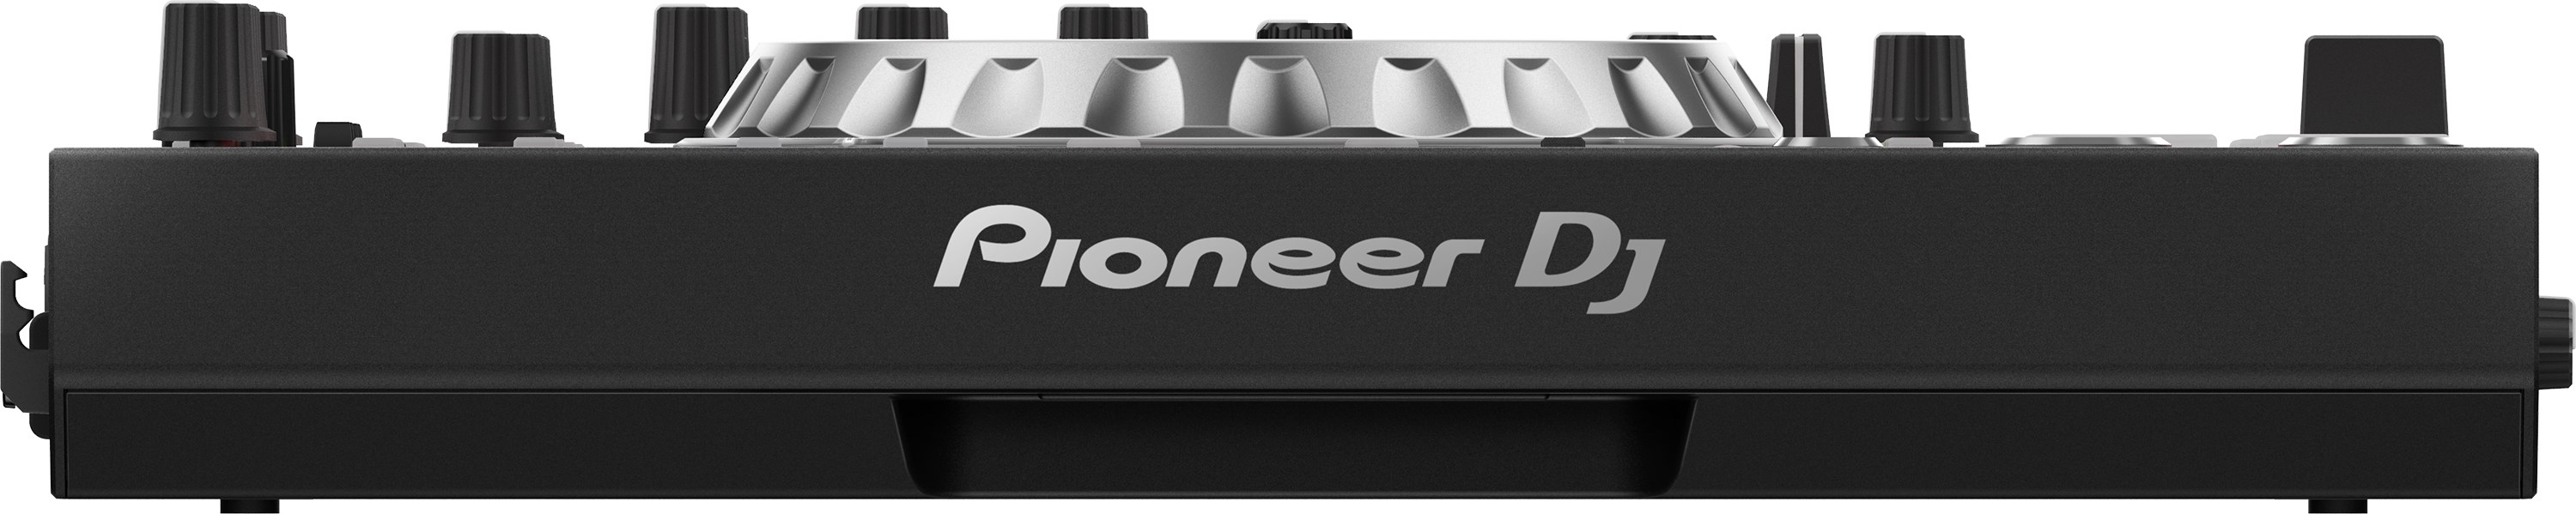 Pioneer Dj Ddj-sx3 - Controlador DJ USB - Variation 4